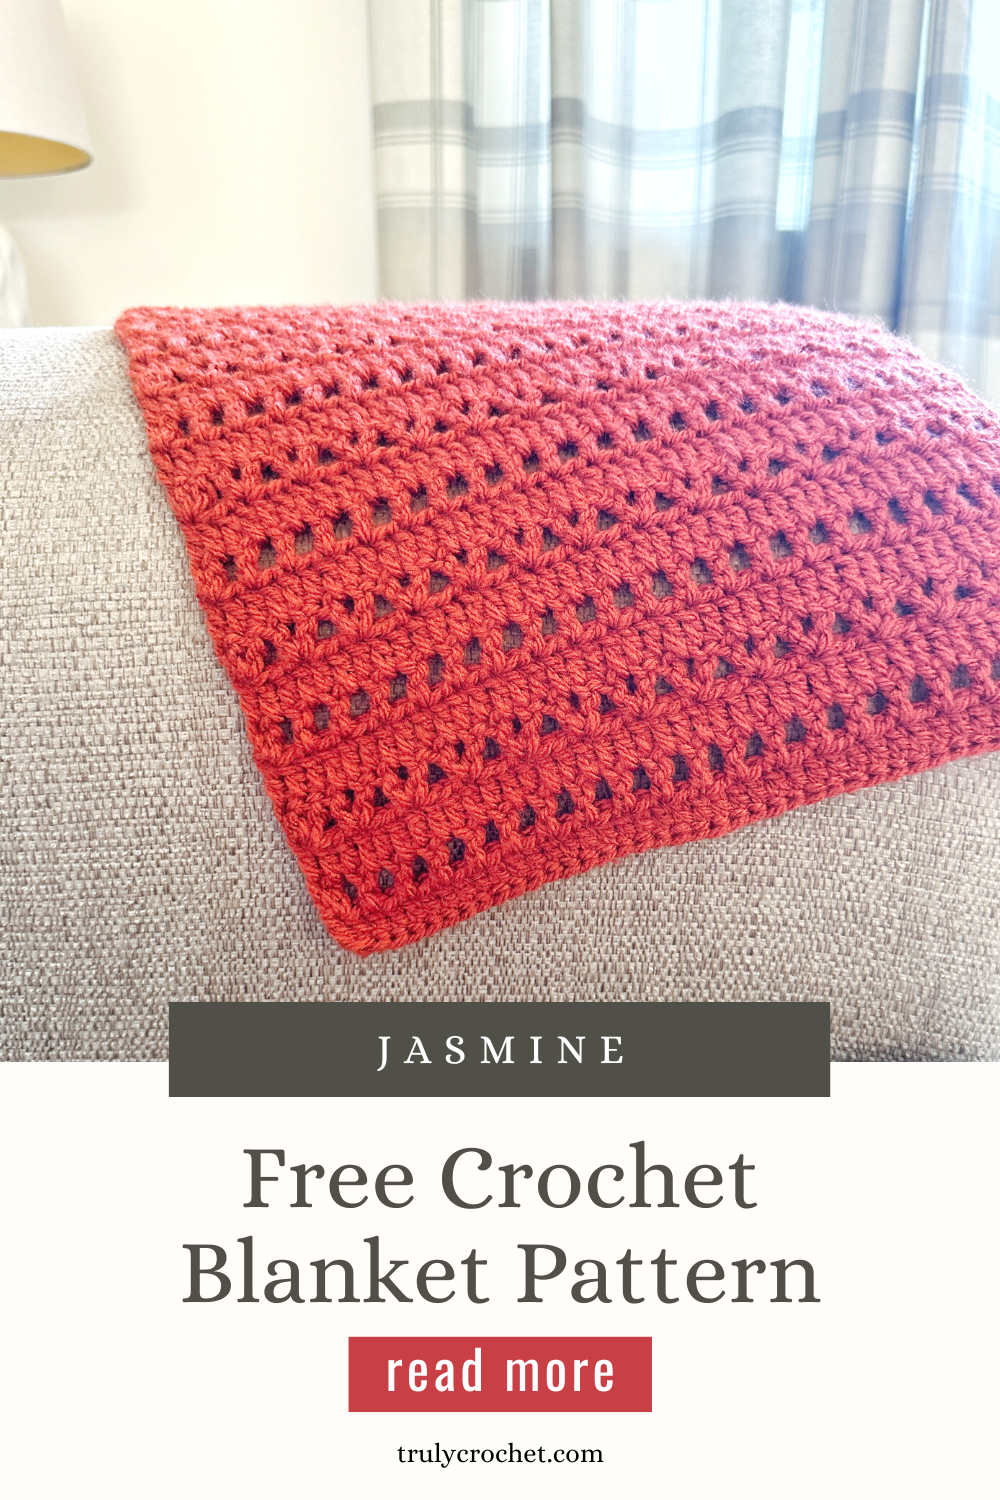 Jasmine Blanket - Free Crochet Pattern